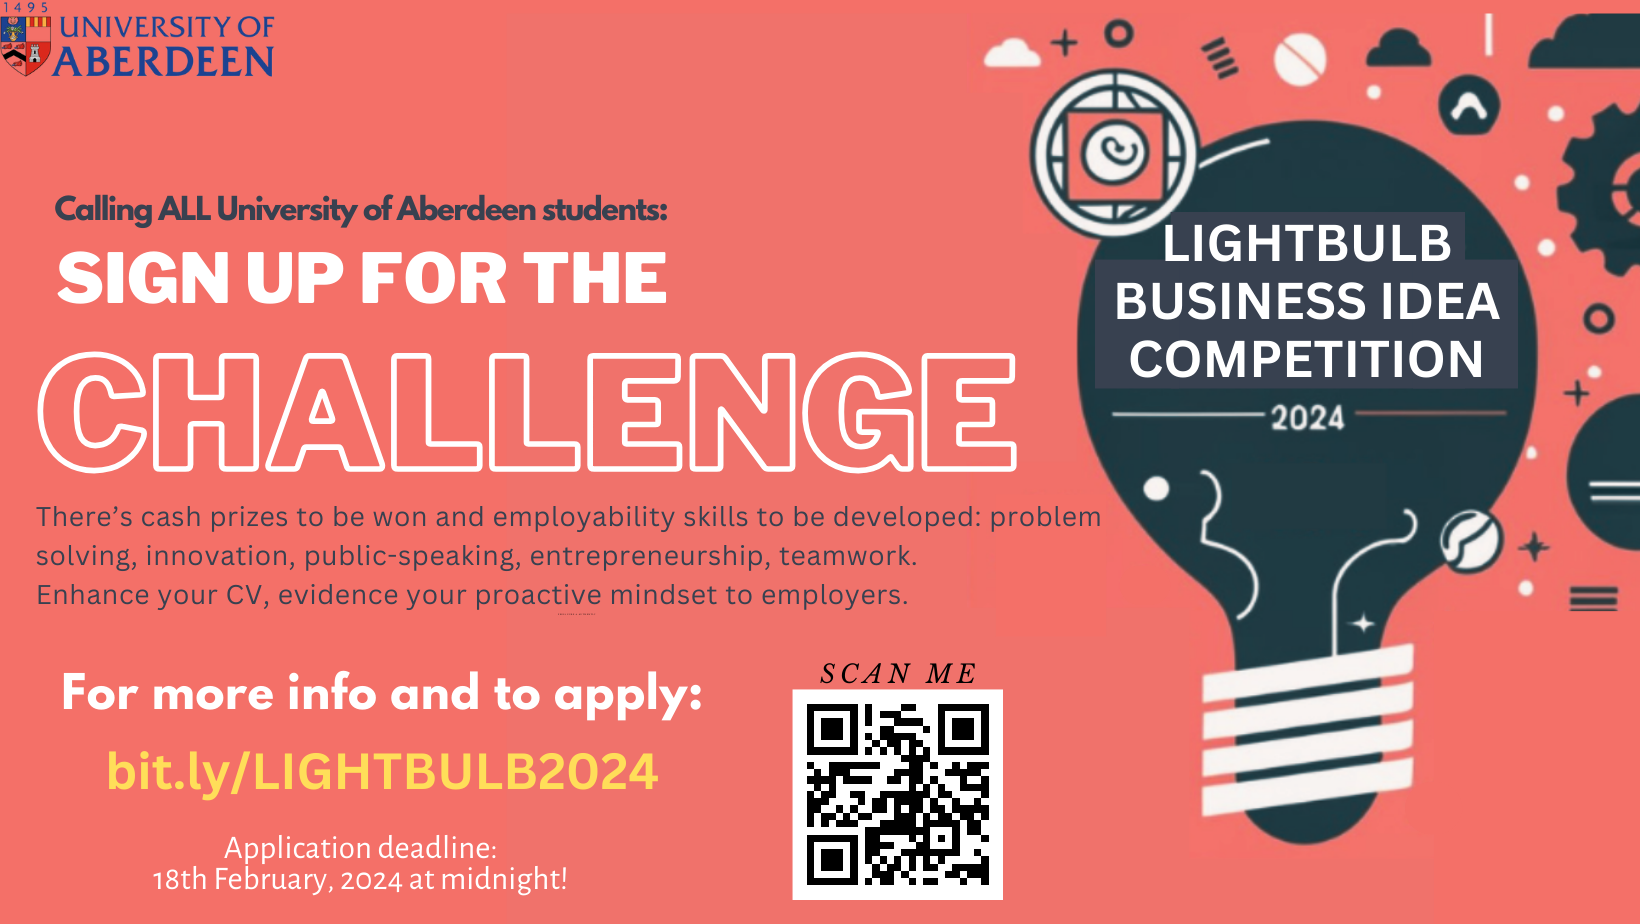 Lightbulb business idea competition 2024 banner